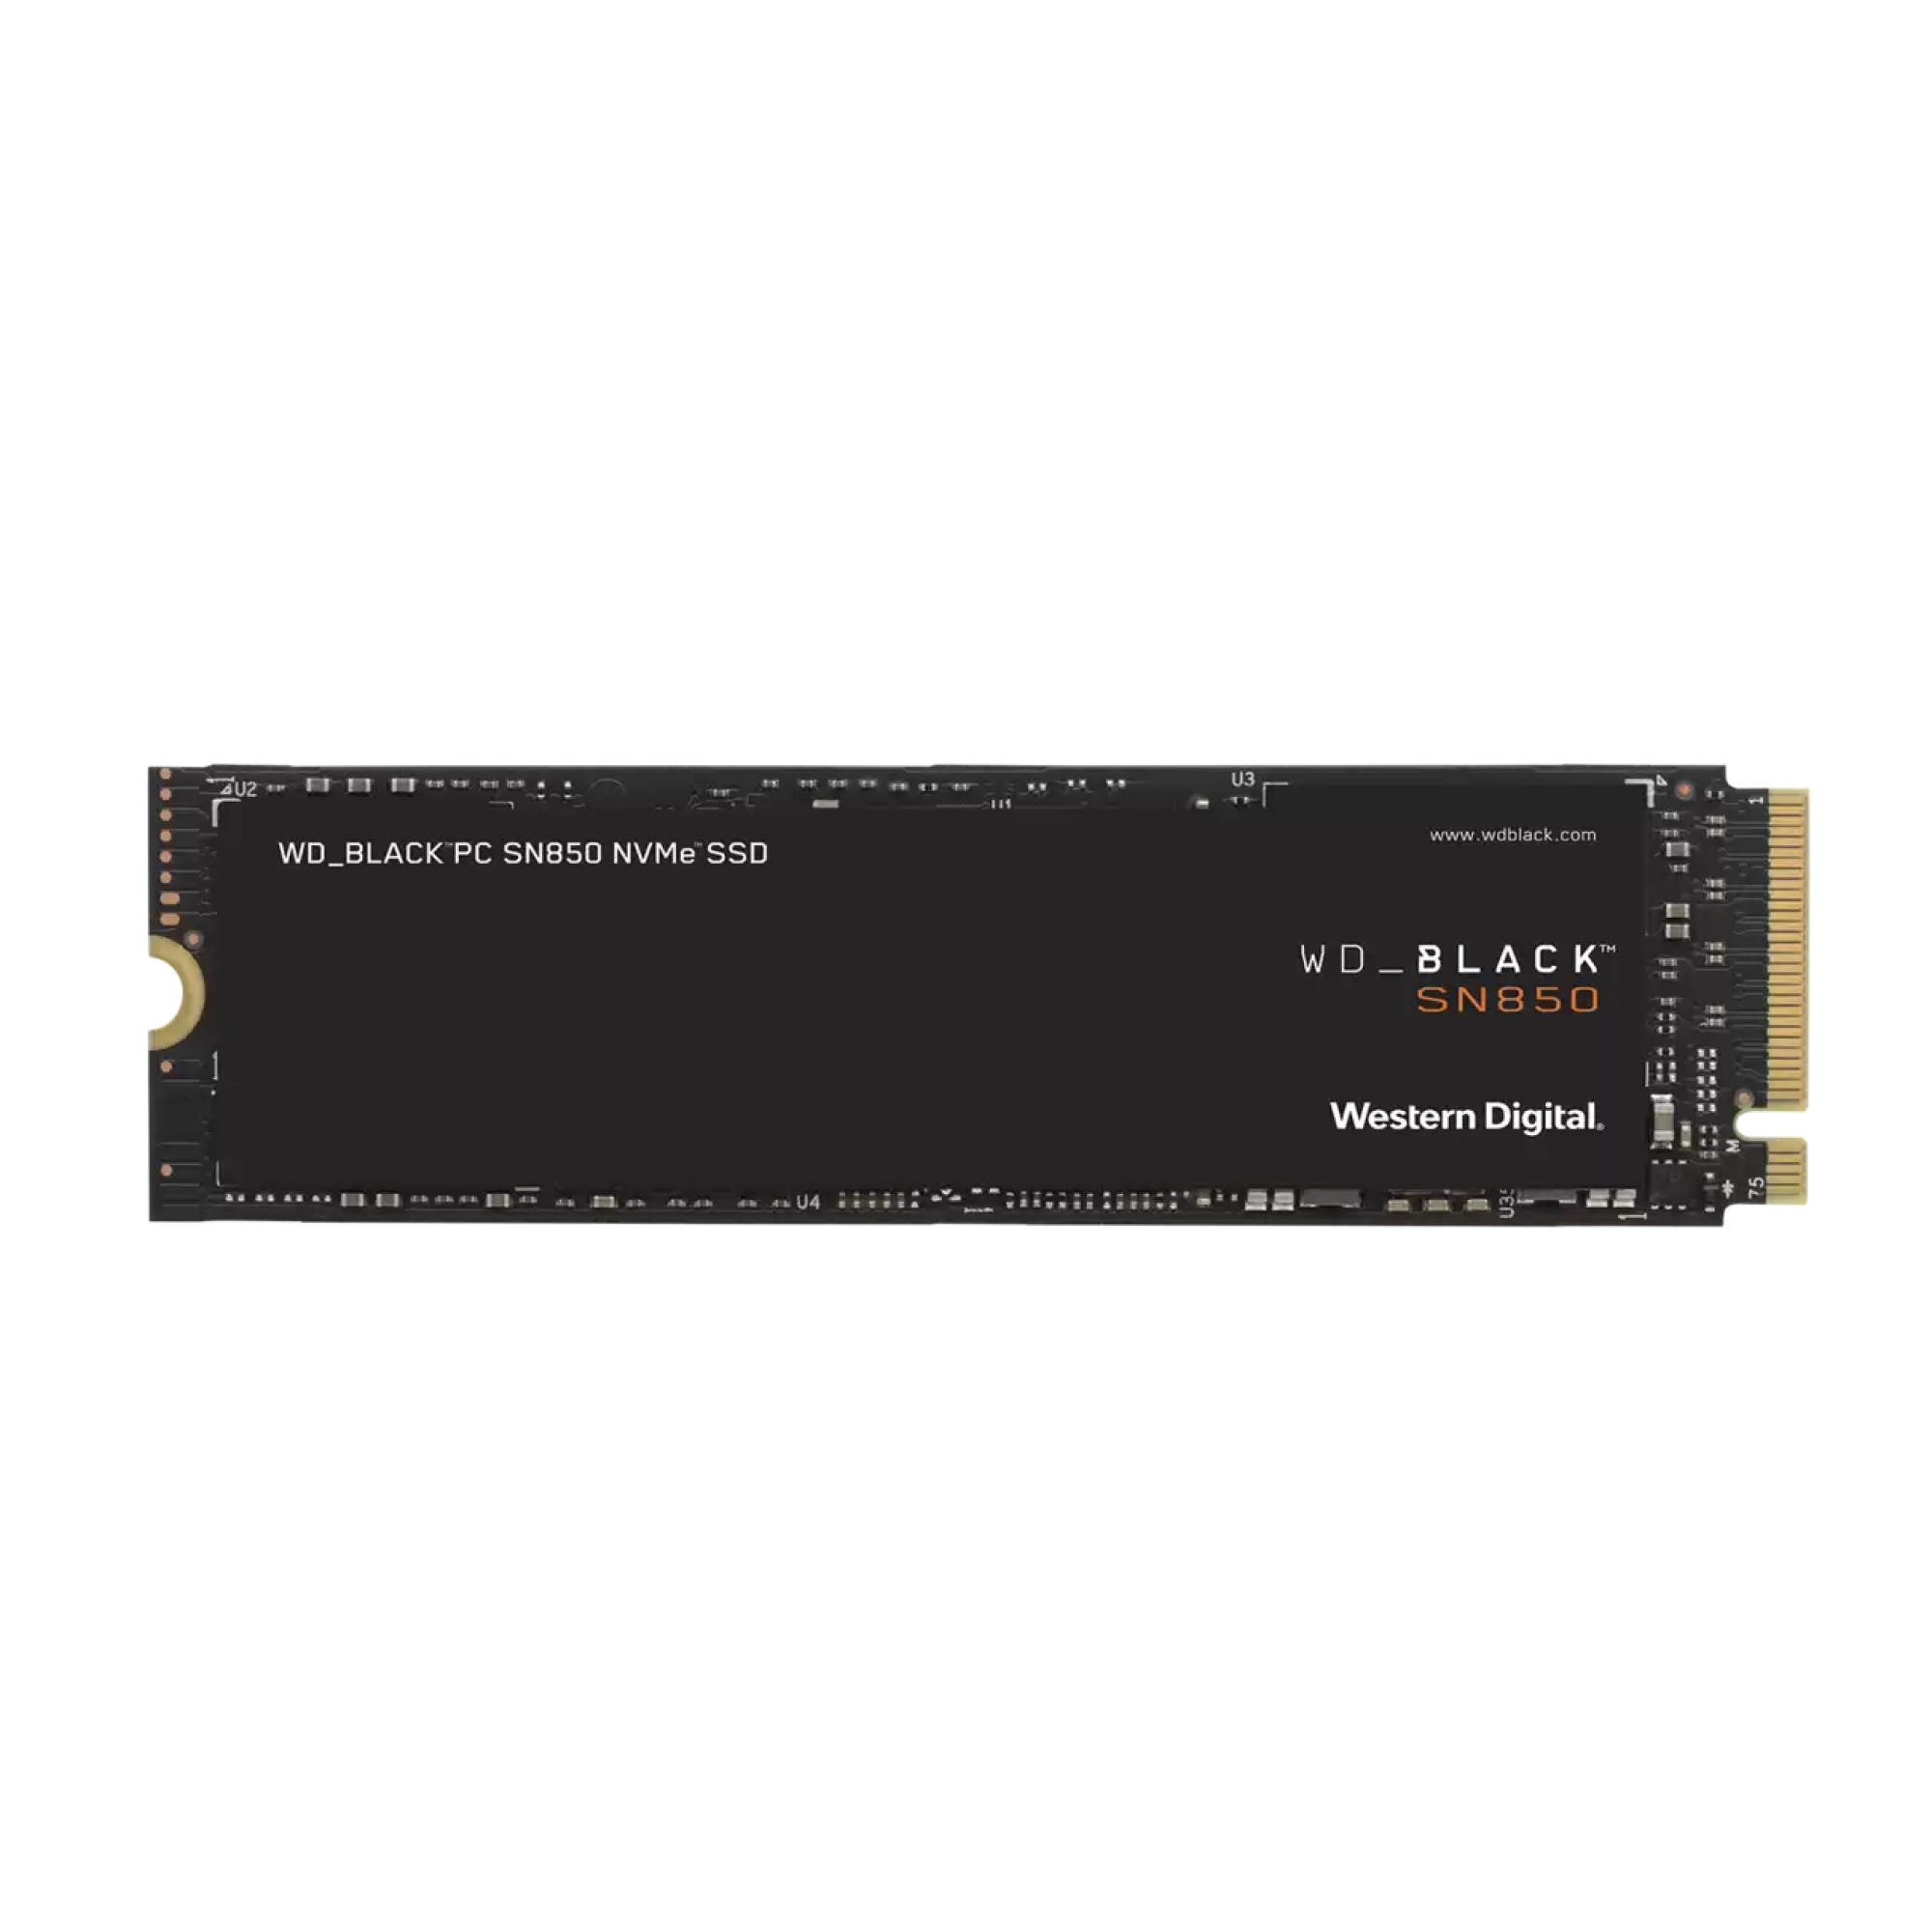 The WD Black SN850 NVMe SSD.